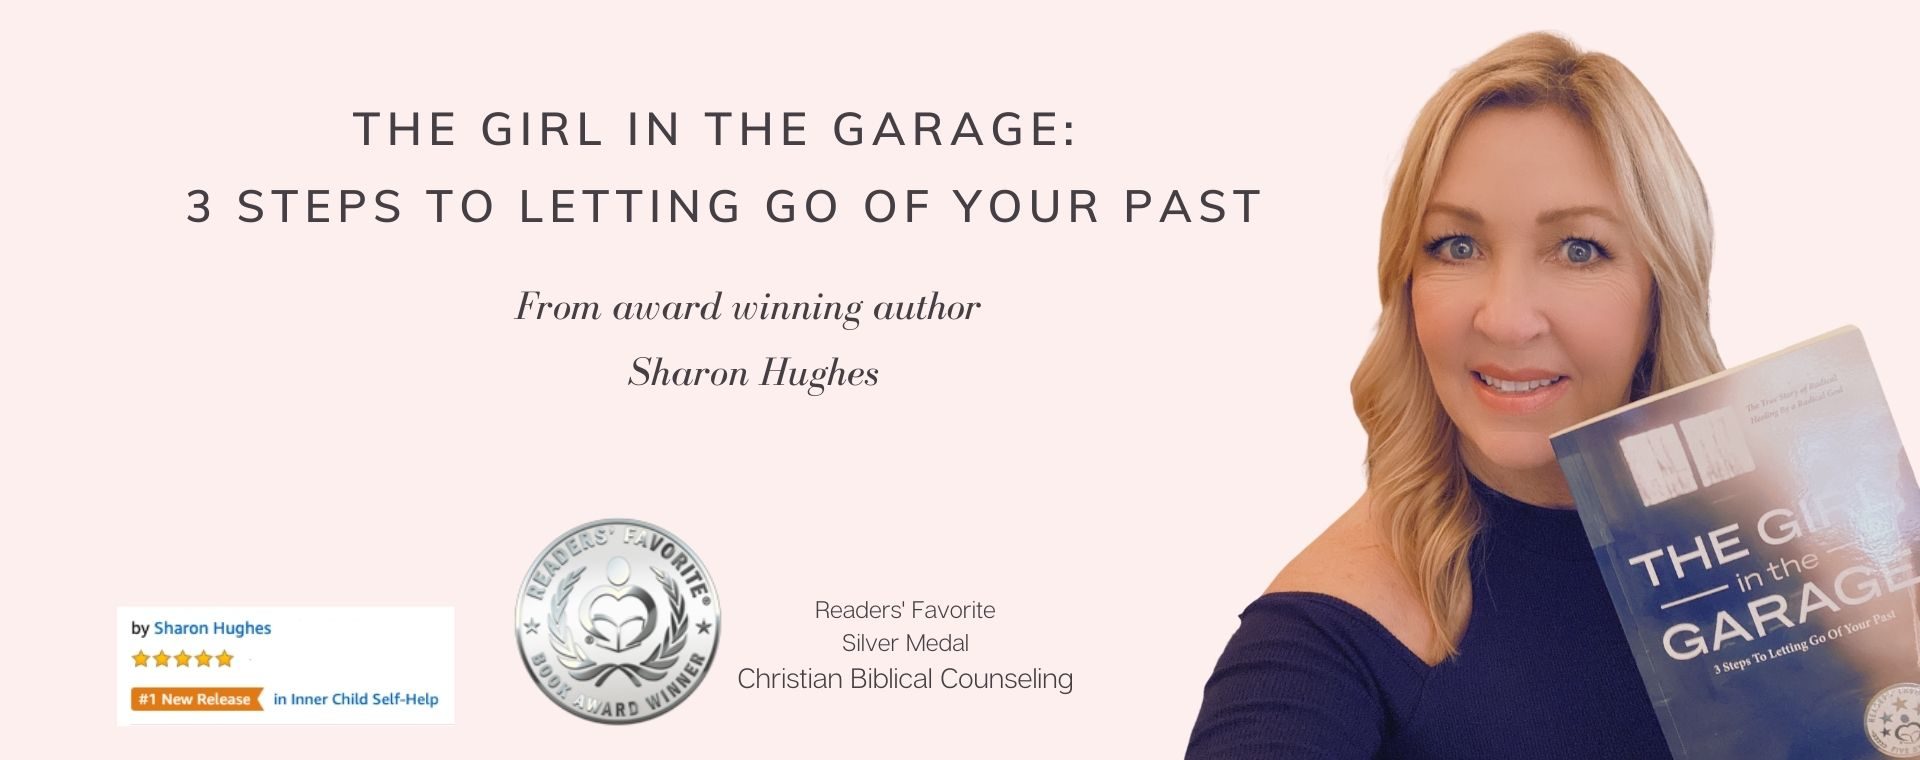 The Girl in The Garage - Sharon Hughes